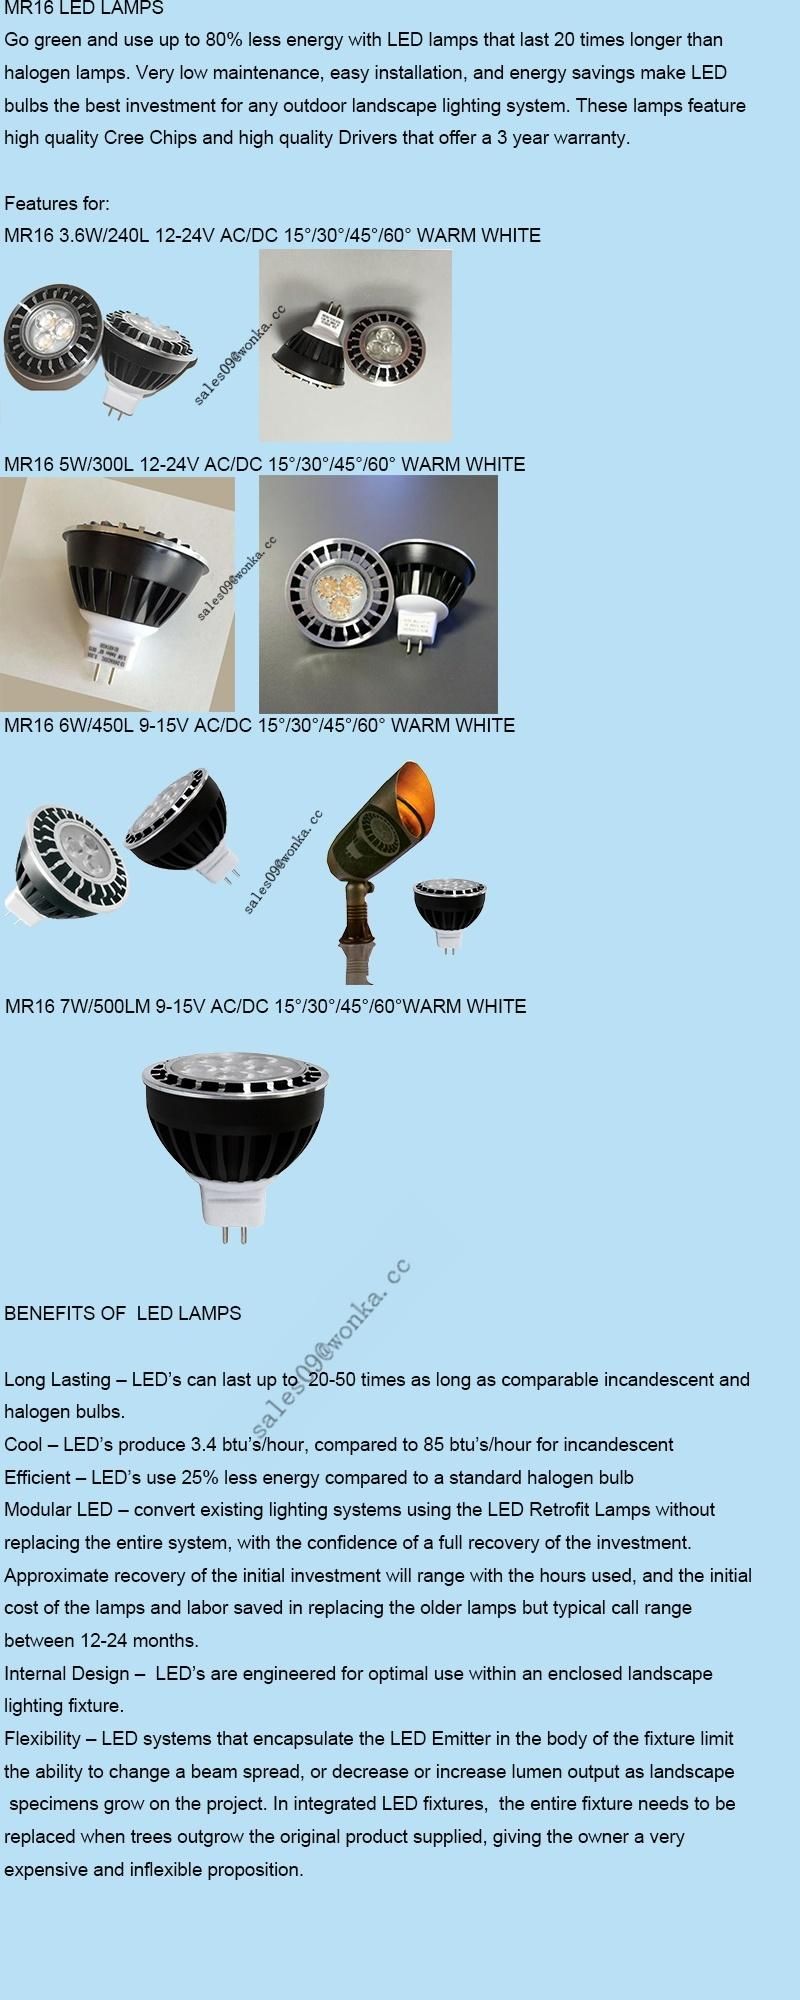 MR16 LED Color Changing Low Voltage Light Bulbs